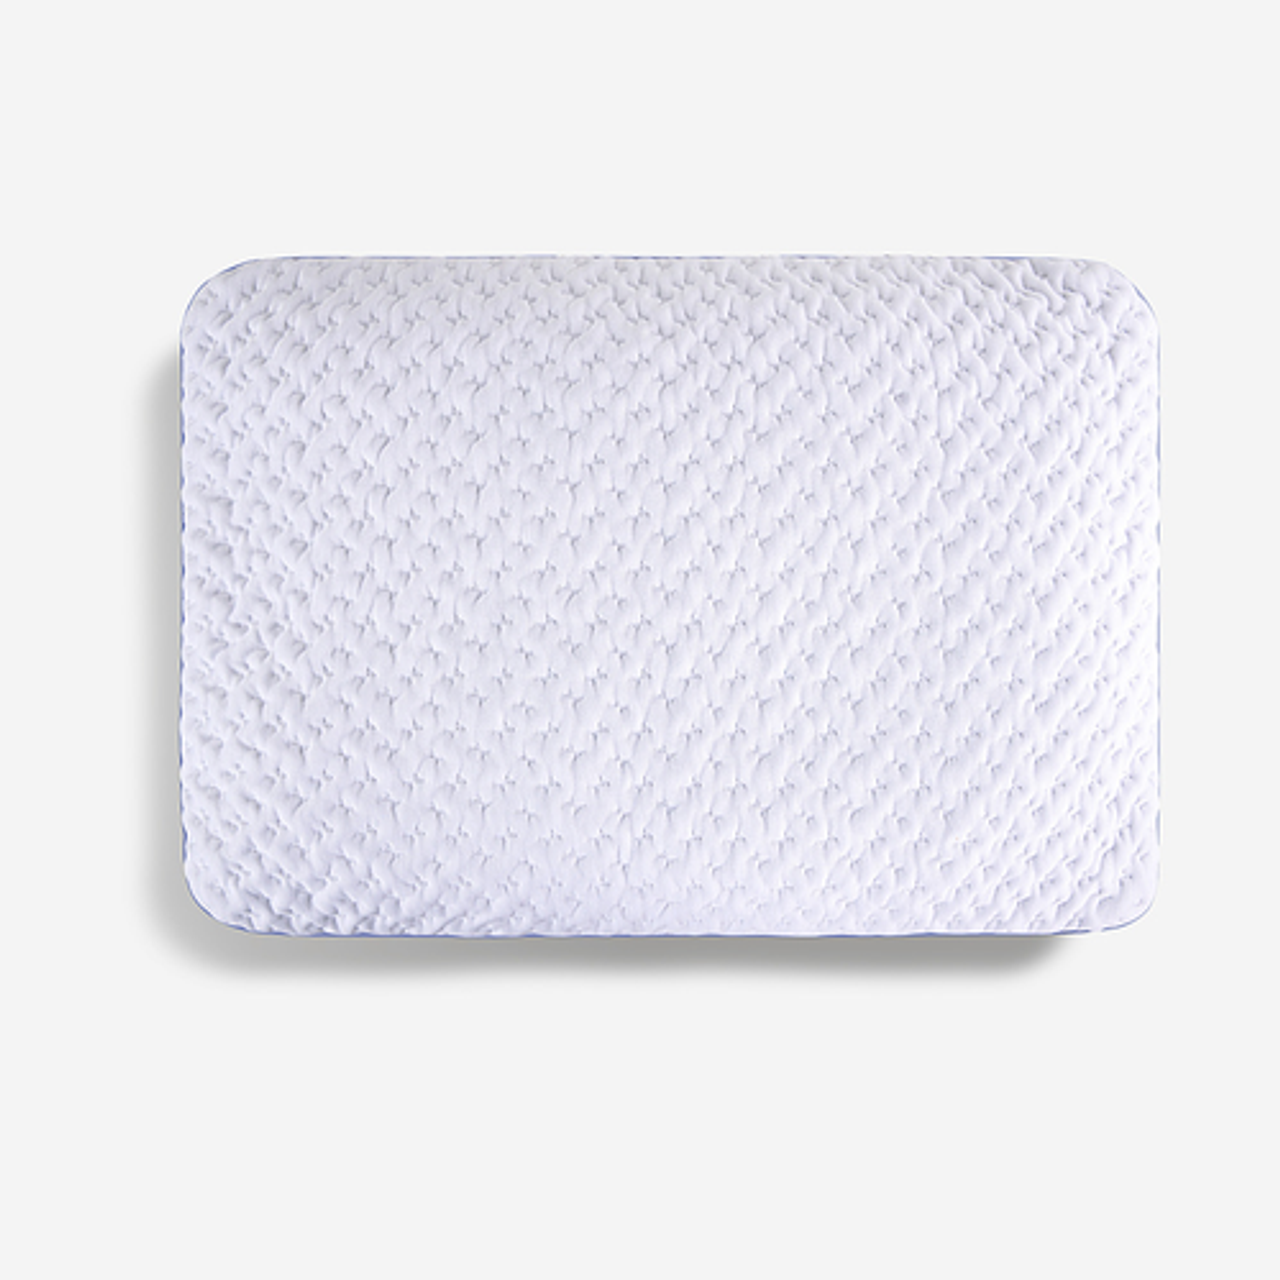 Bedgear - Balance Performance Pillow 0.0 - White